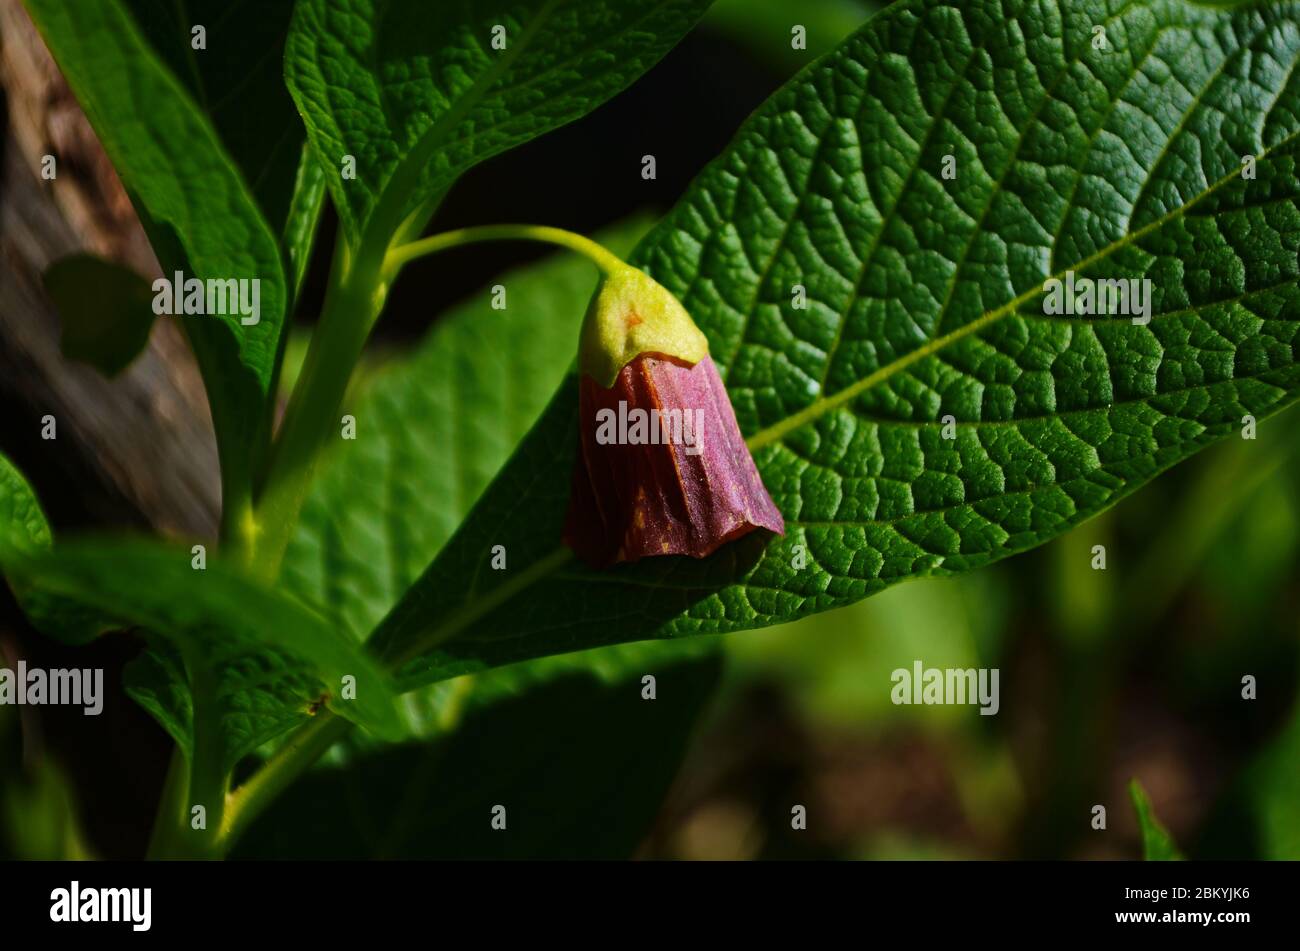 Deadly Nightshade - Atropa belladonna Poisonous Plant Stock Photo